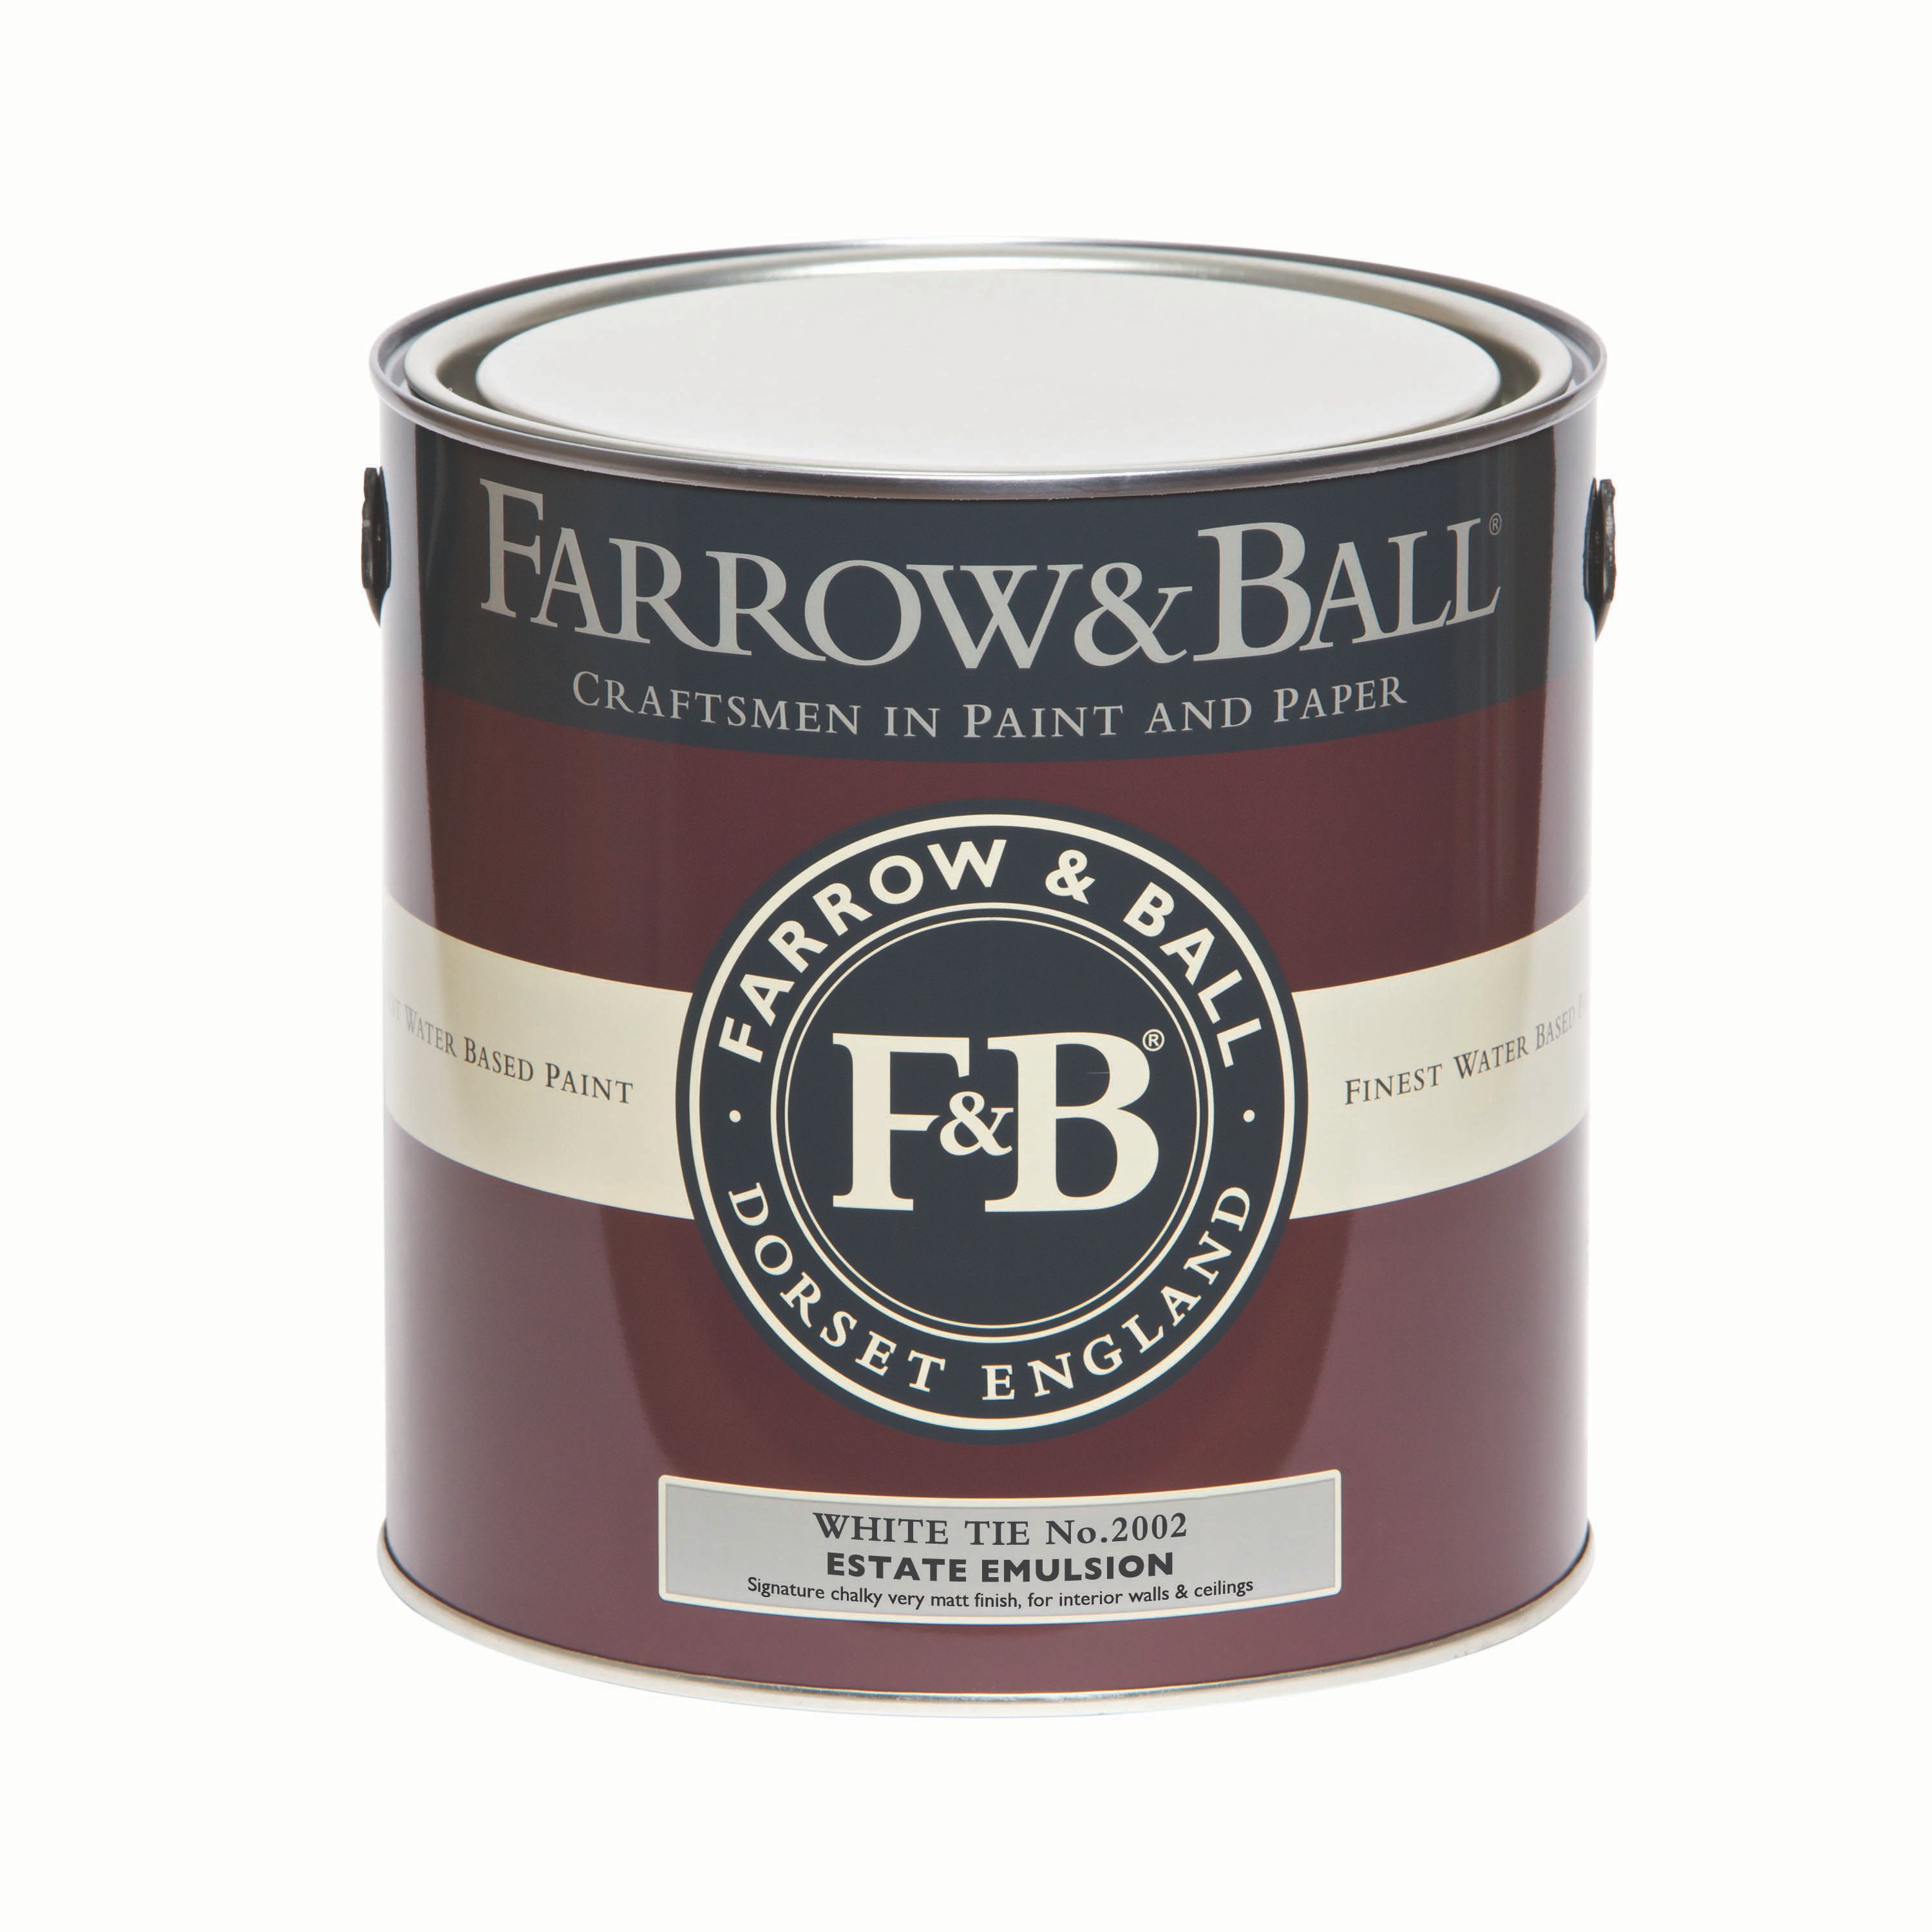 Farrow & Ball Estate White tie No.2002 Matt Emulsion paint, 2.5L